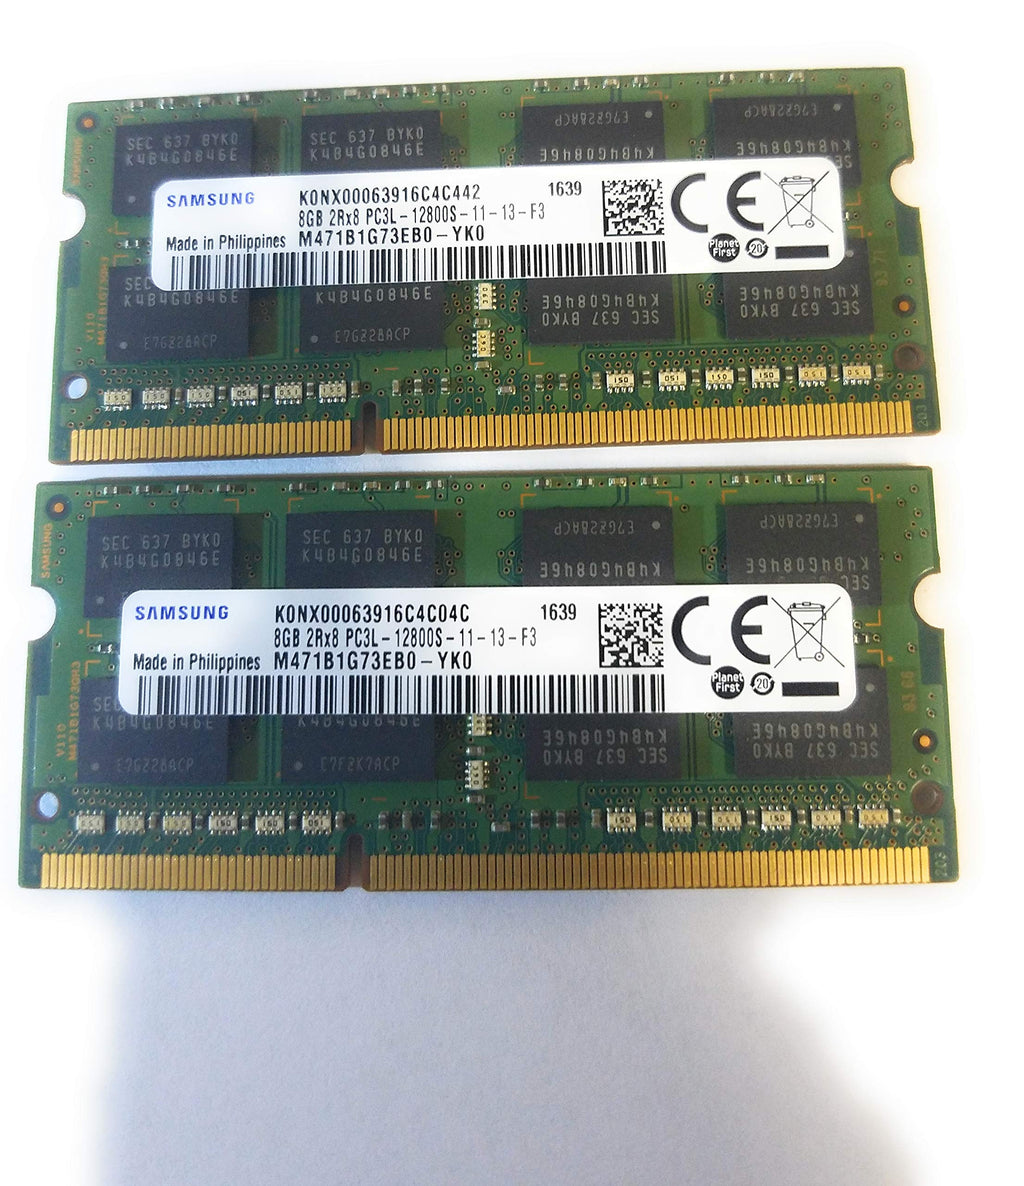  [AUSTRALIA] - Samsung 16GB (2 x 8GB) 204-pin SODIMM, DDR3 PC3L-12800, 1600MHz ram Memory Module for laptops (M471B1G73EB0-YK0 x 2)